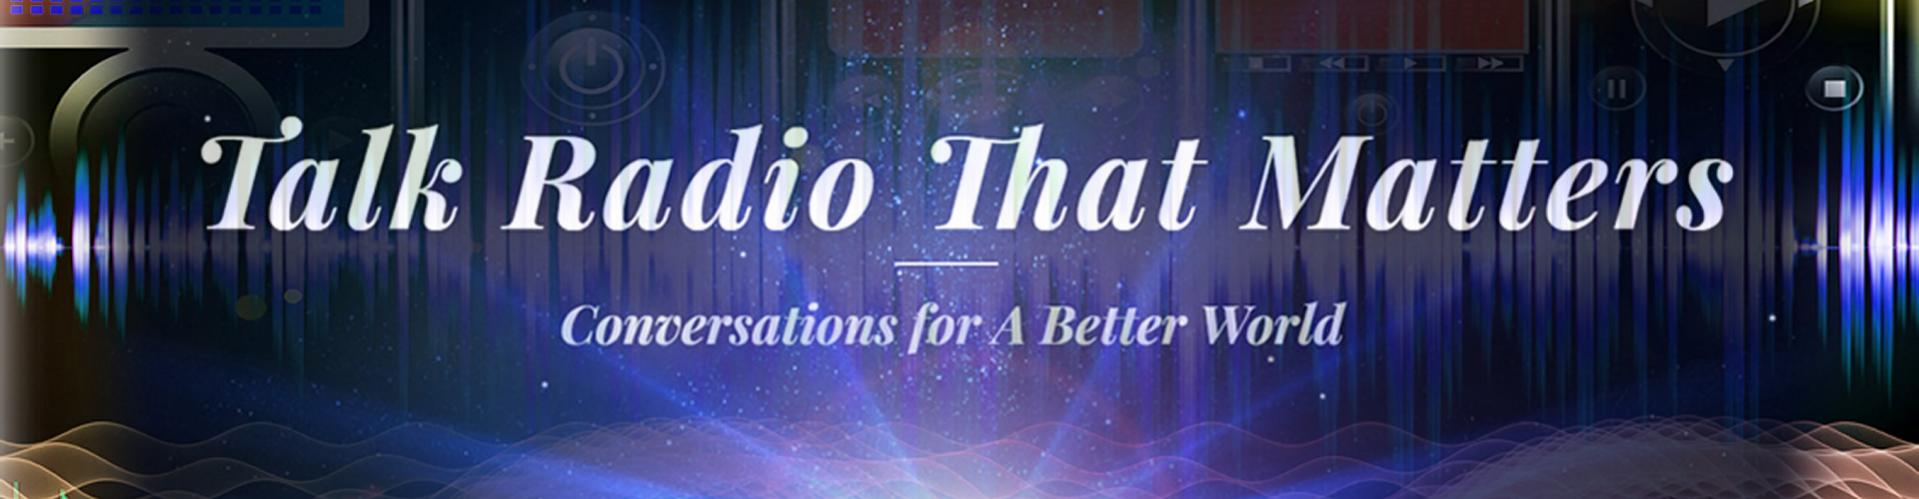 Transformational Talk Radio that matters